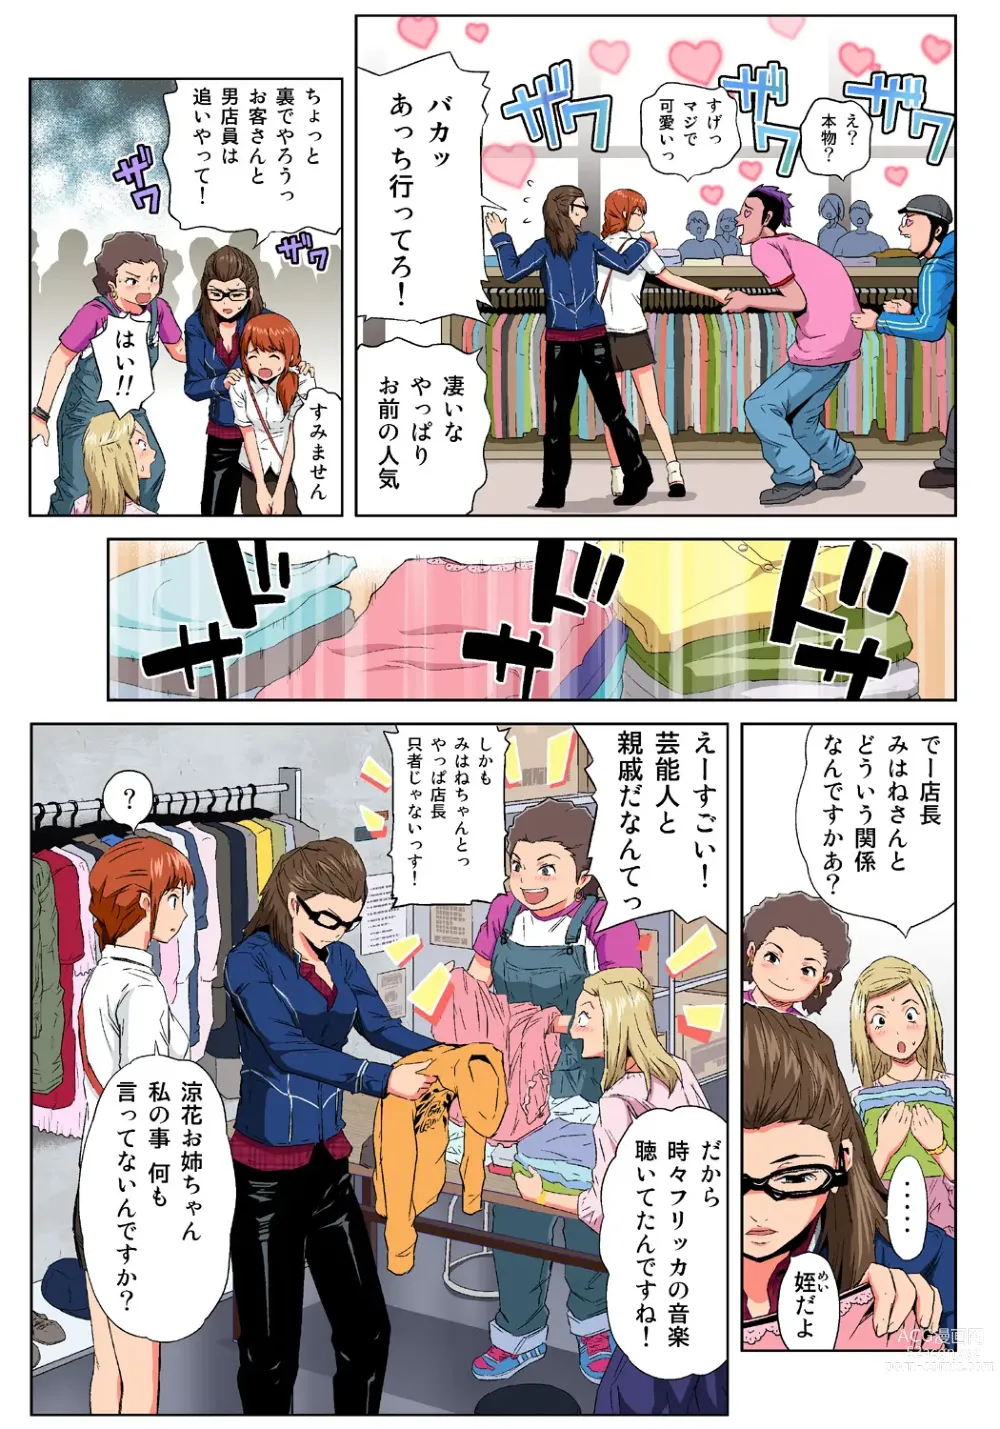 Page 9 of manga HiME-Mania Vol. 37